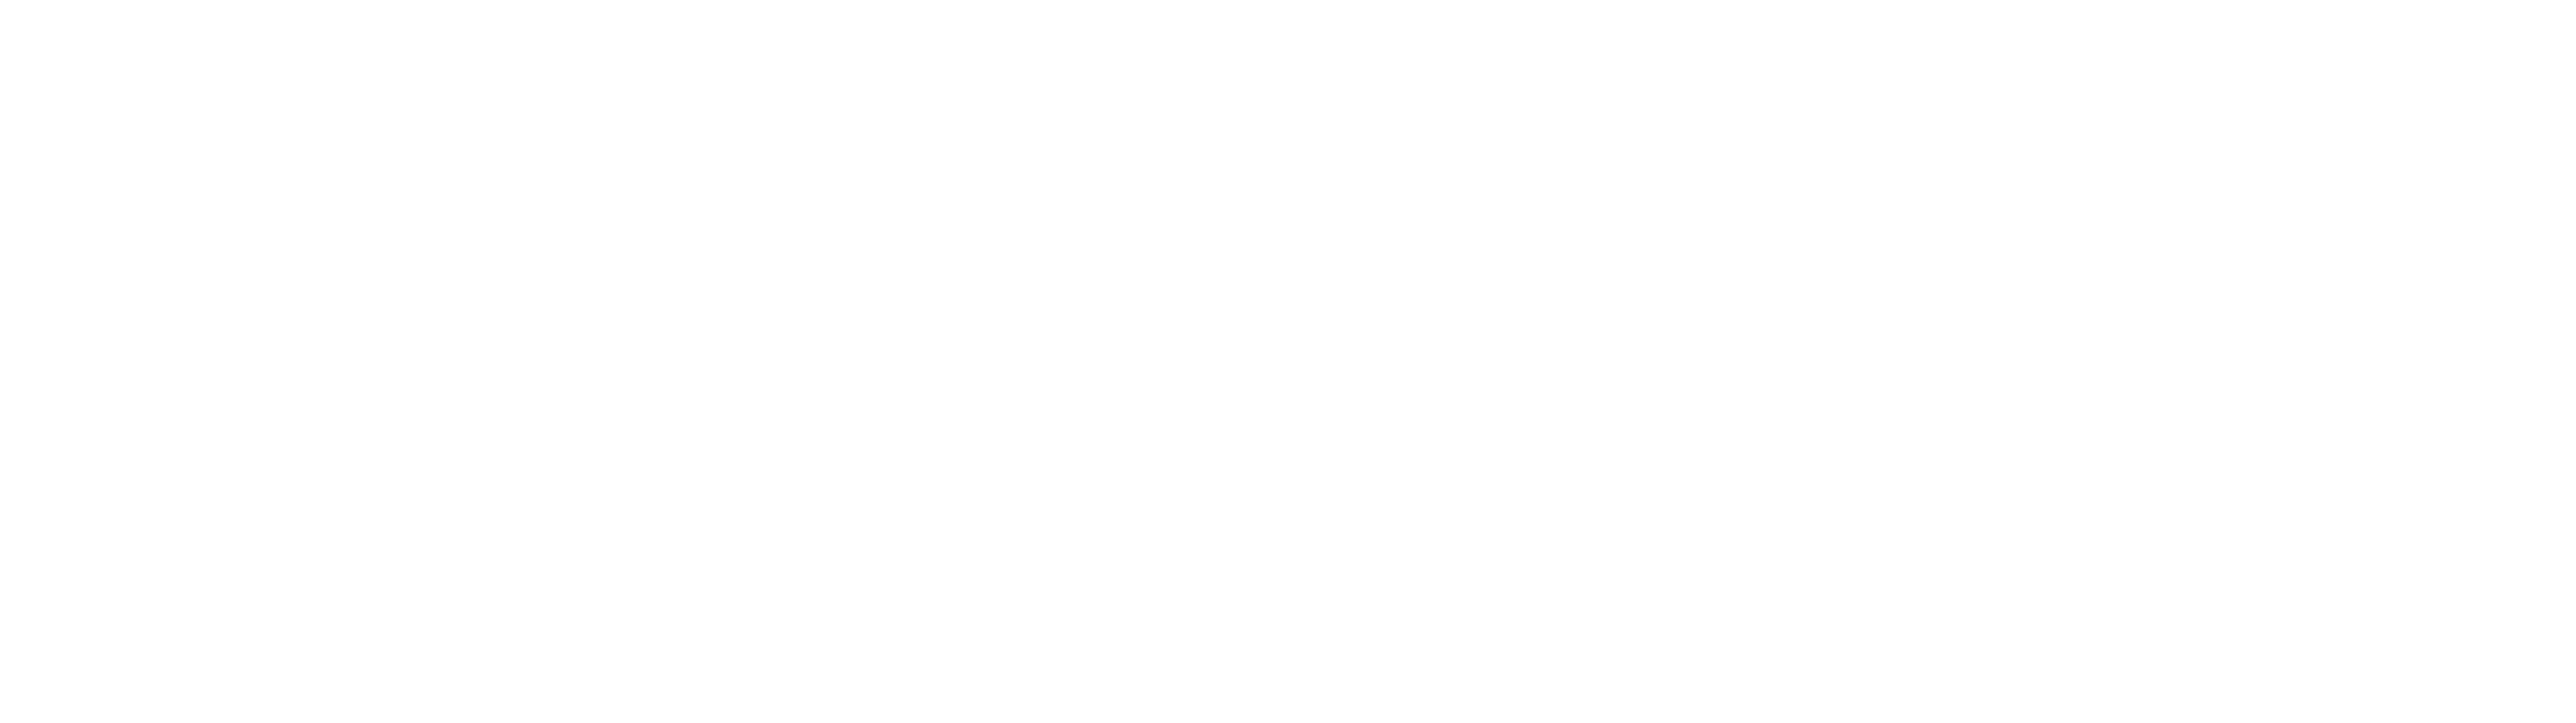 Madison & Company Properties